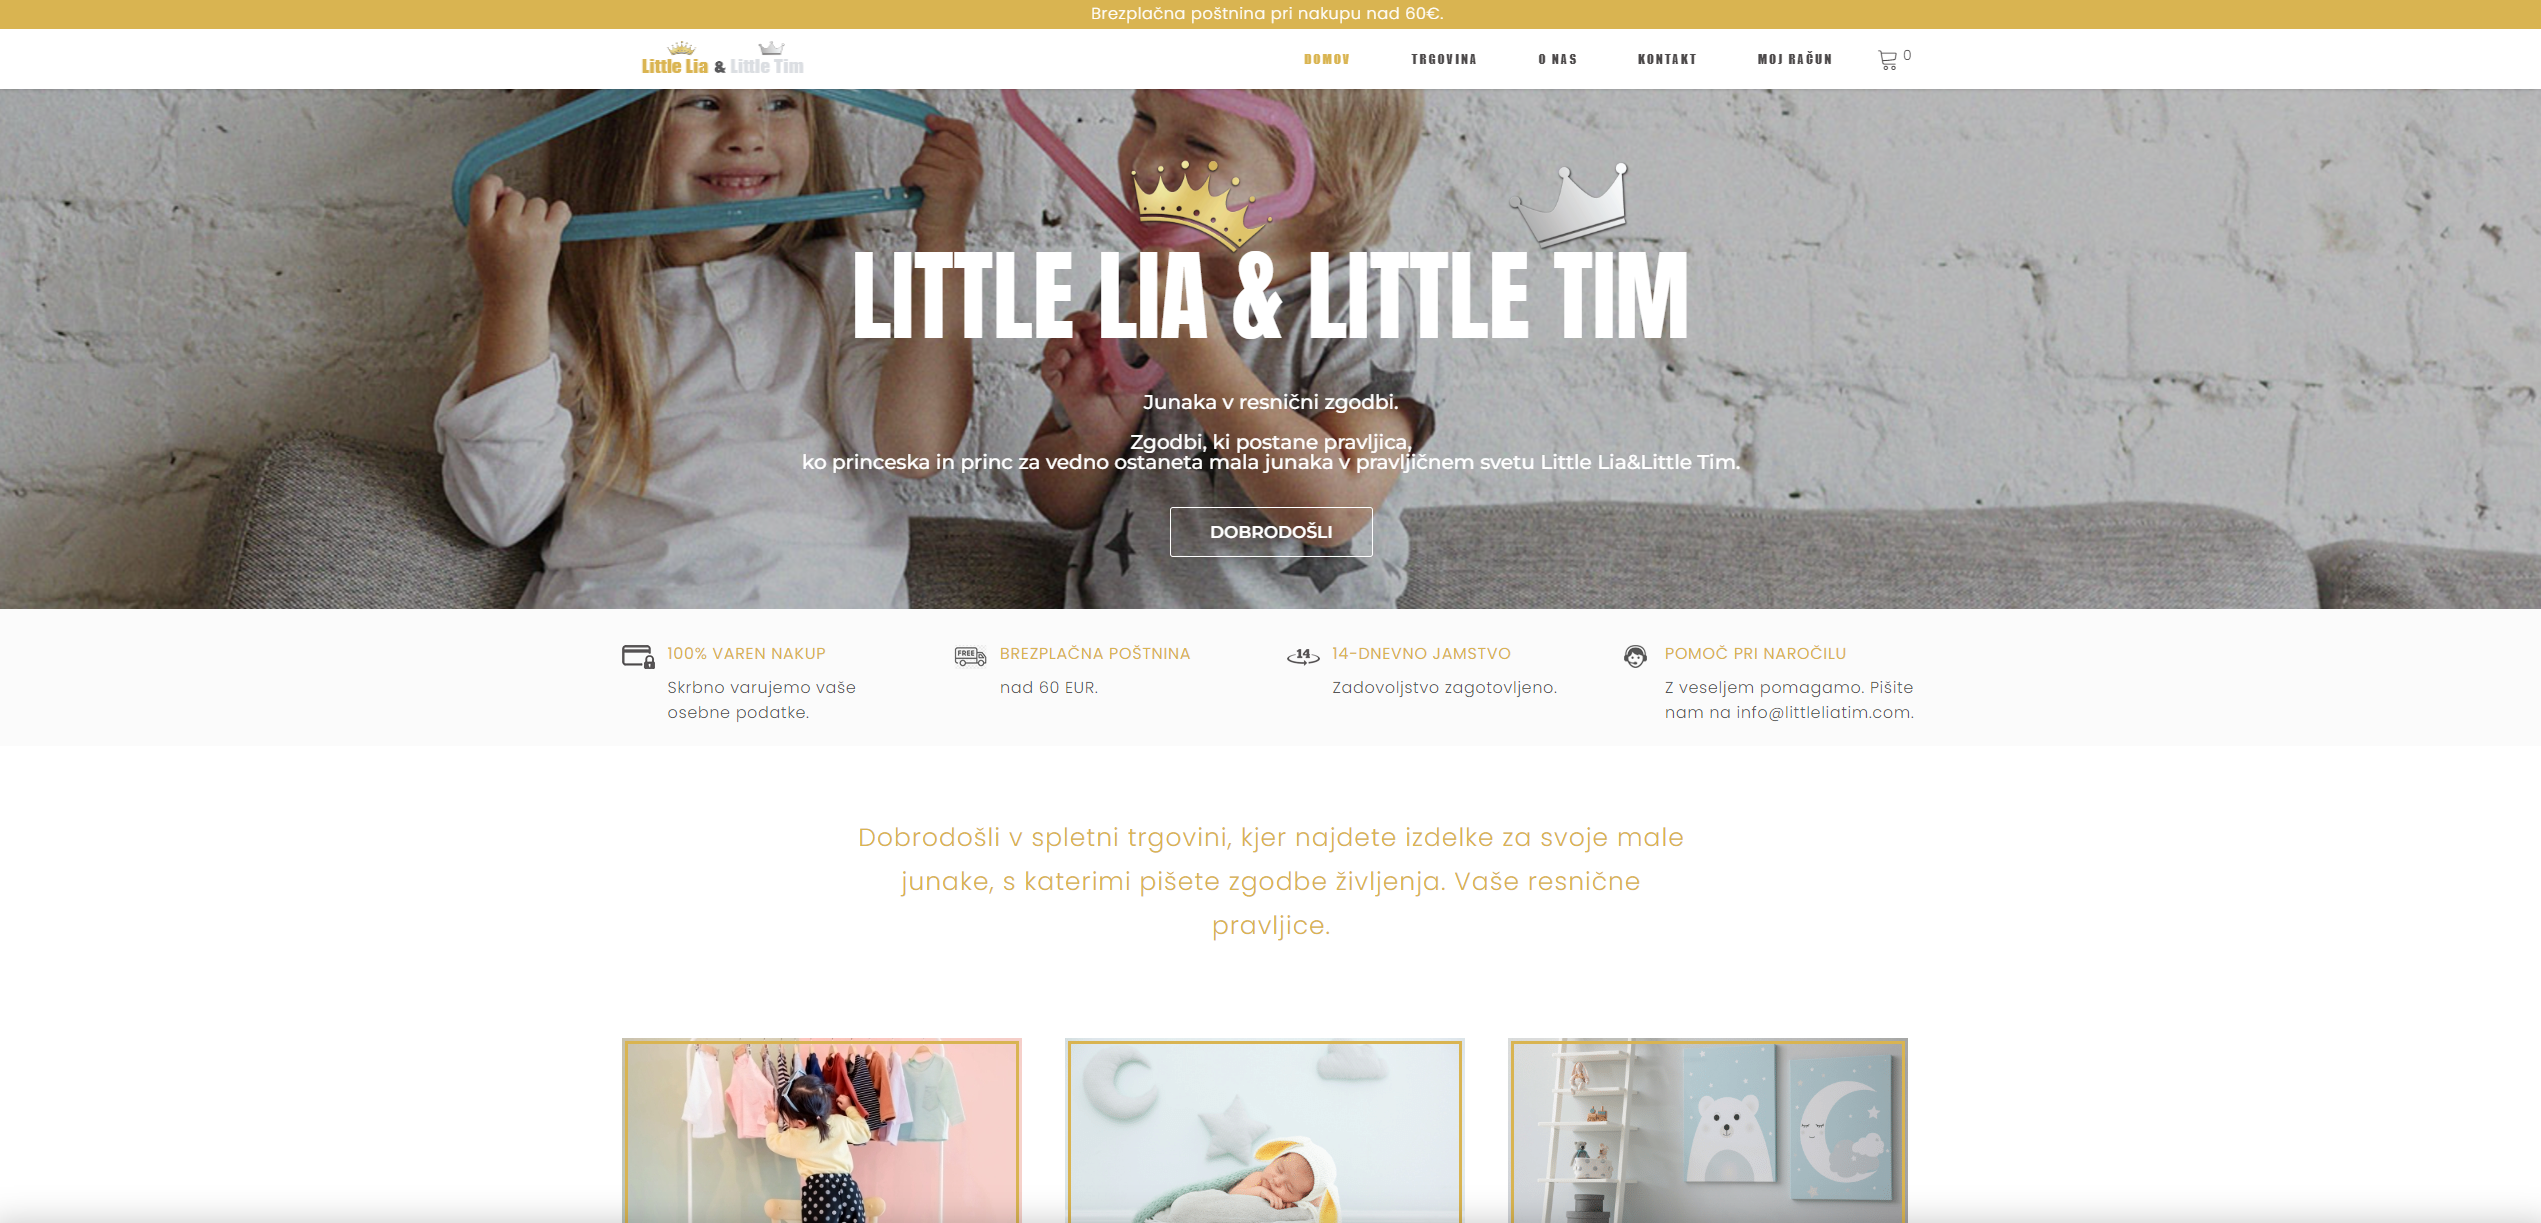 Little Lia & Little Tim